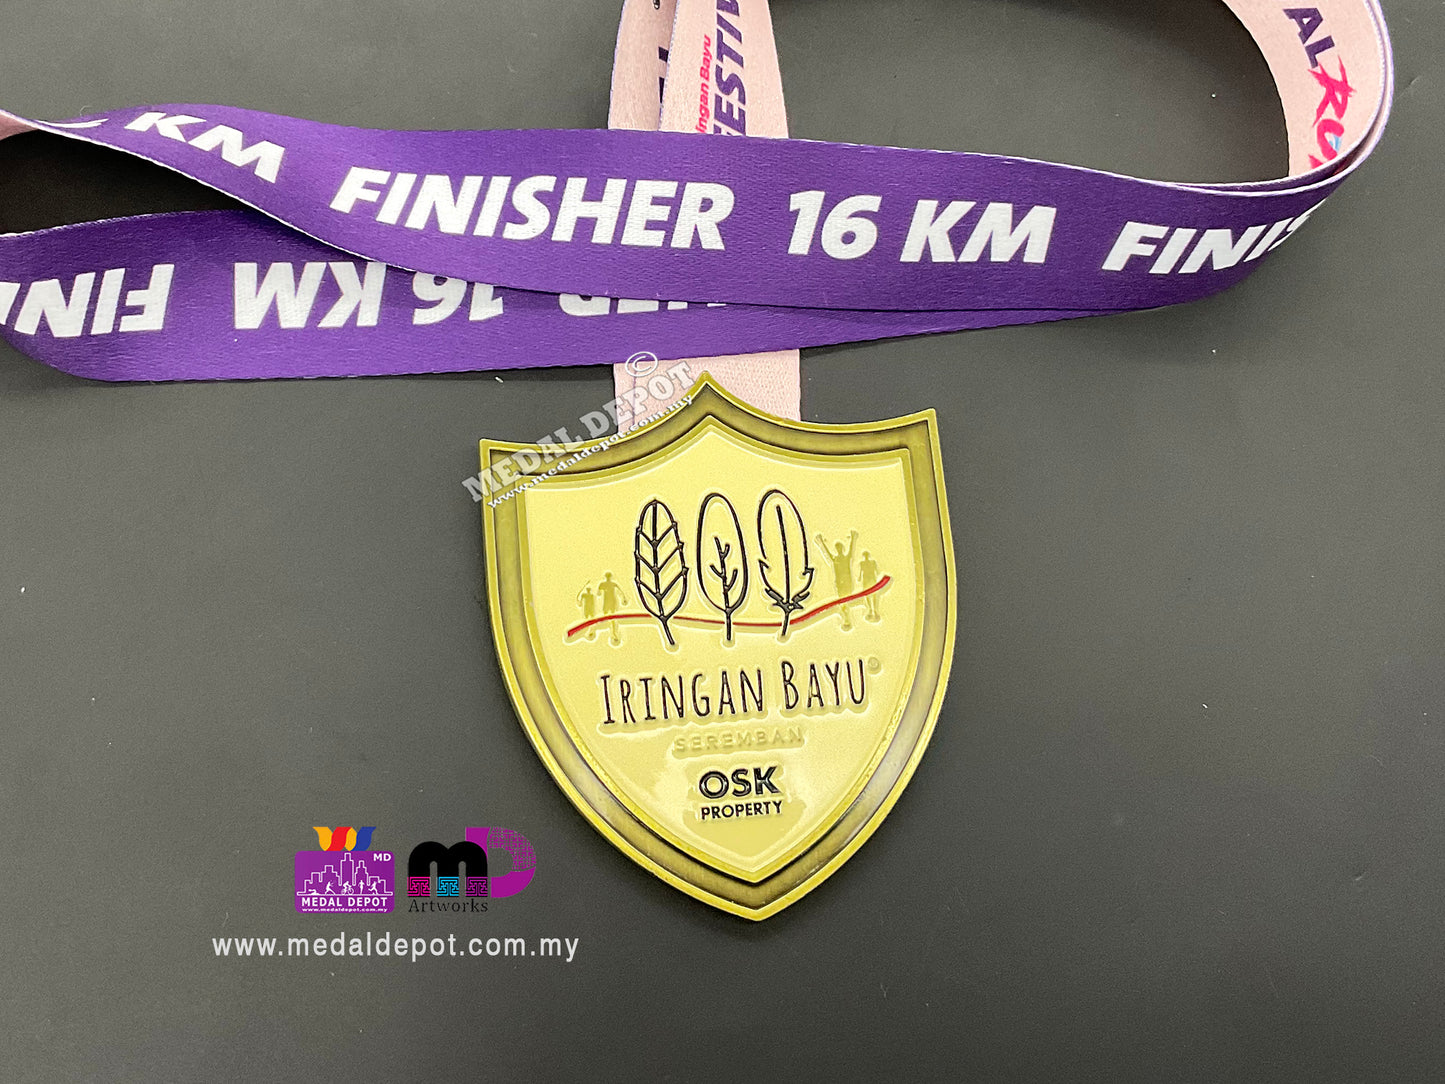 Iringan Bayu Festival Run 2022 medal